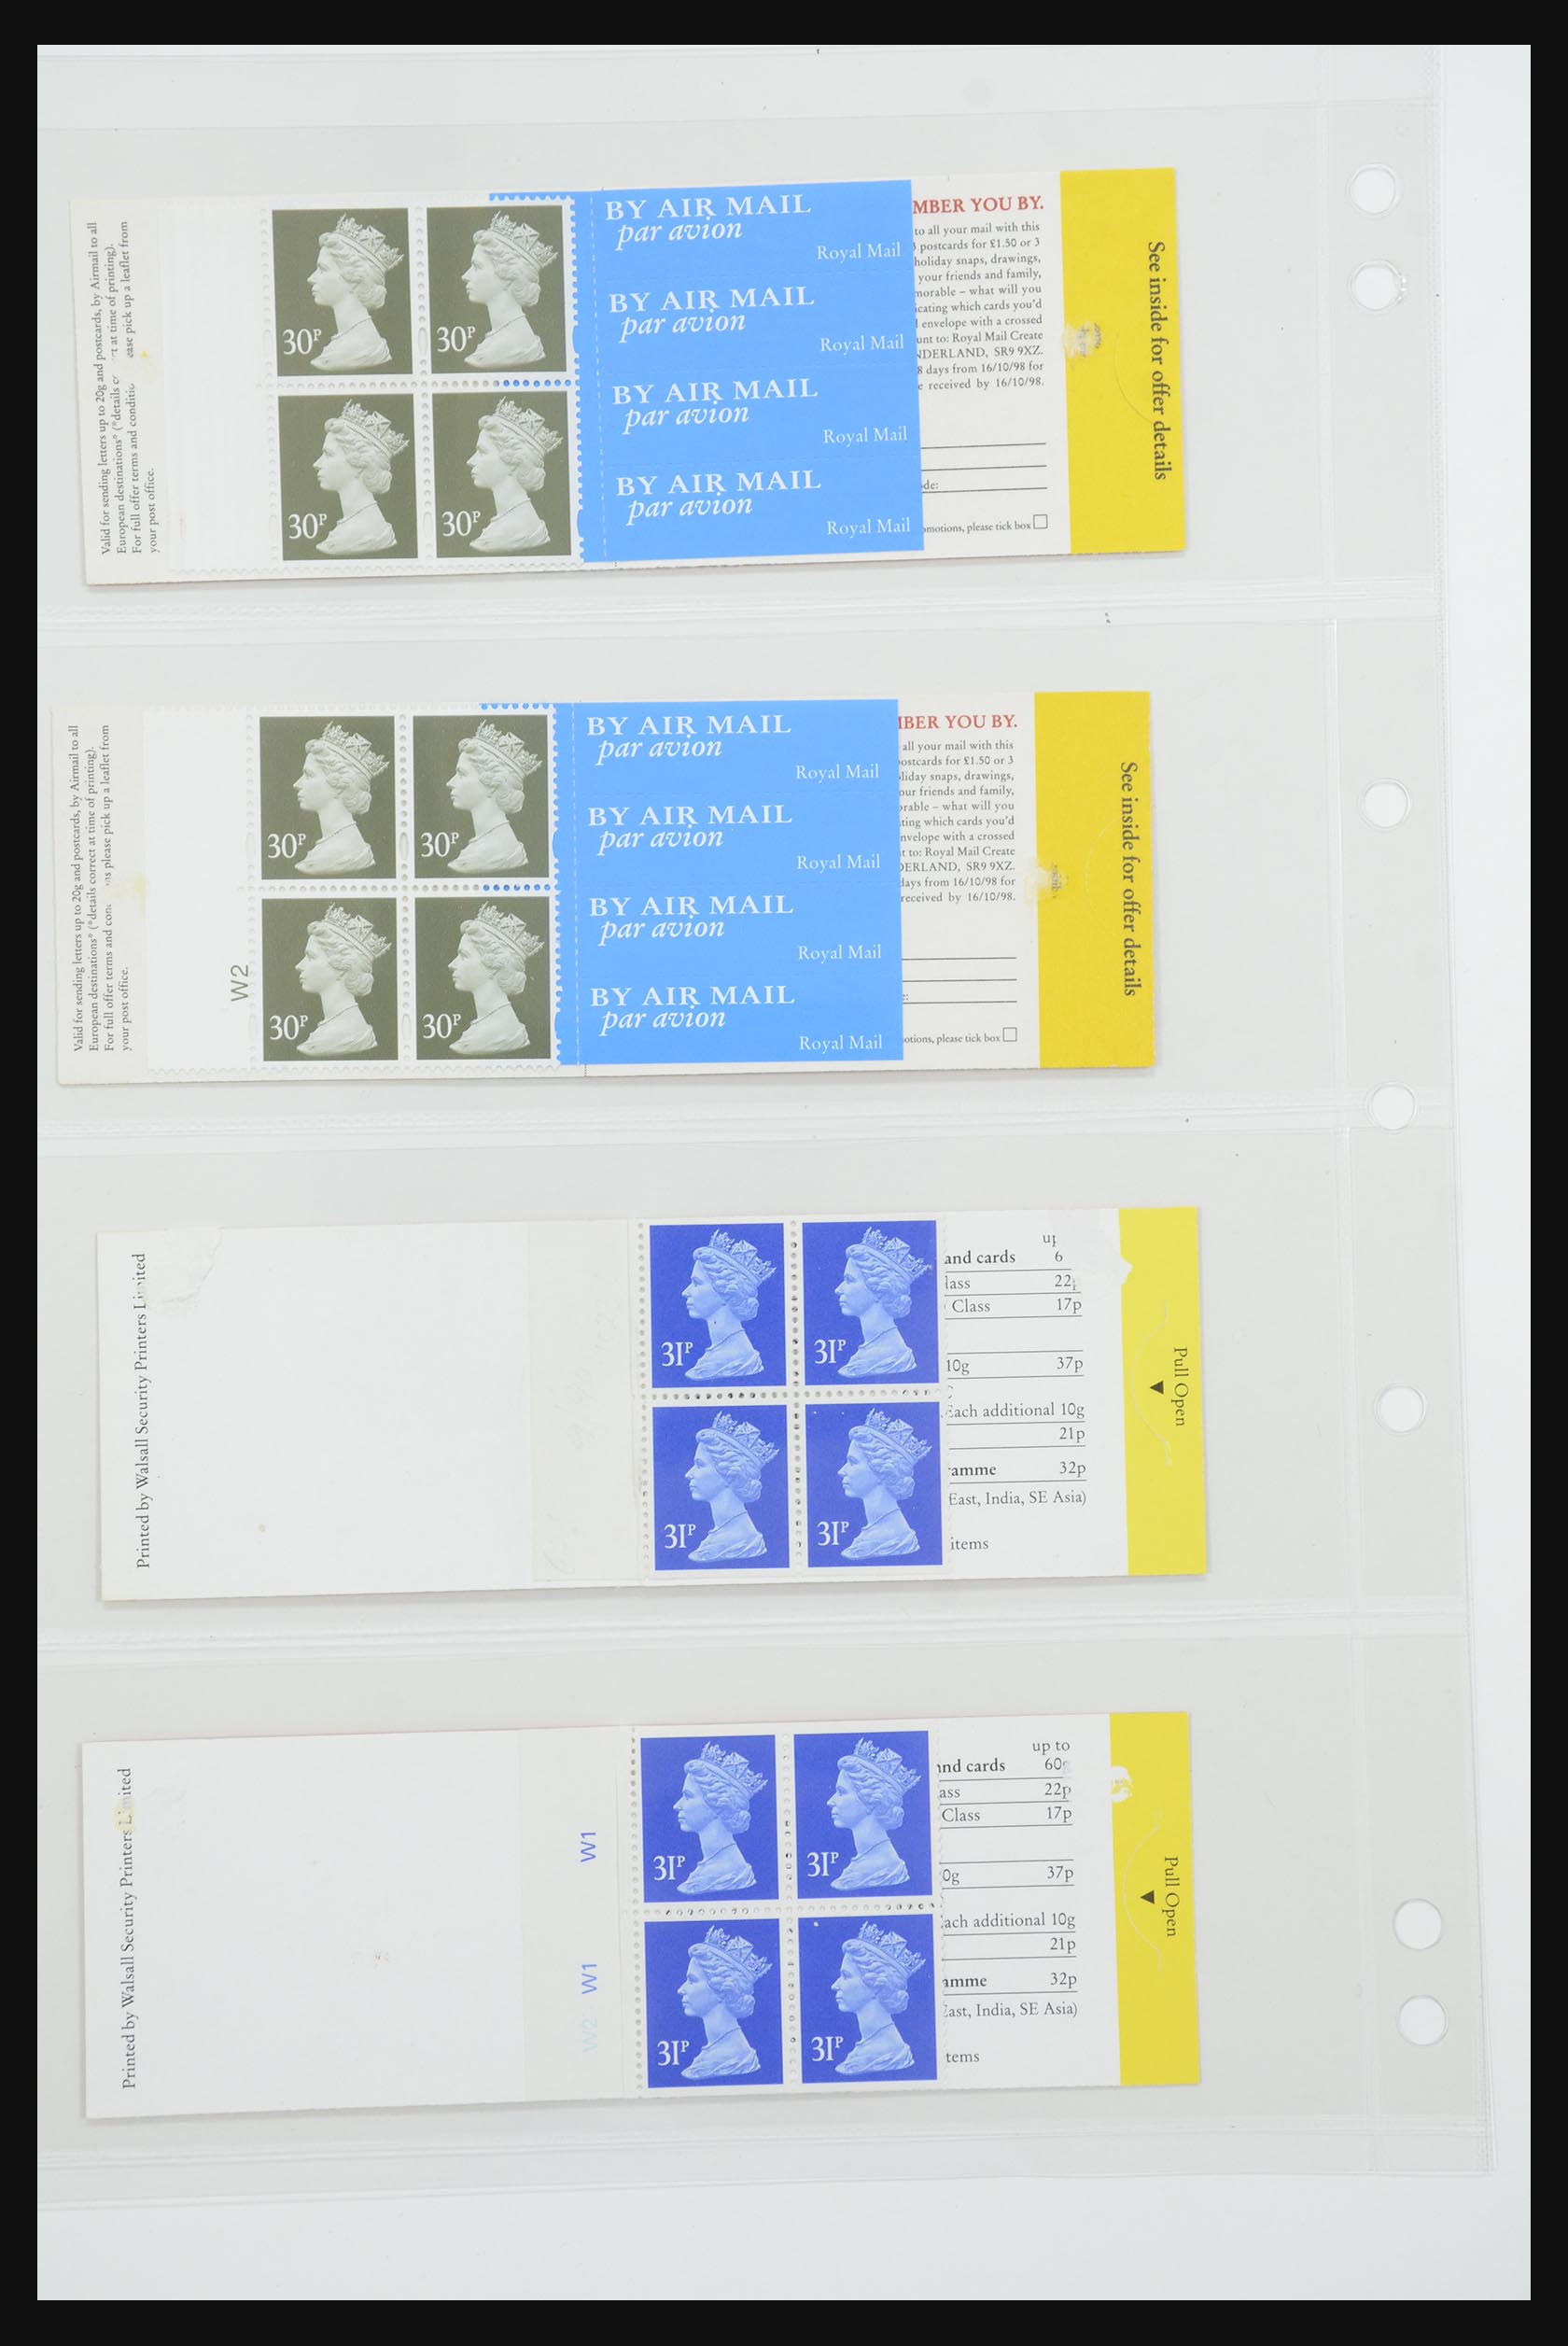 31959 034 - 31959 Great Britain stampbooklets 1987-2016!!